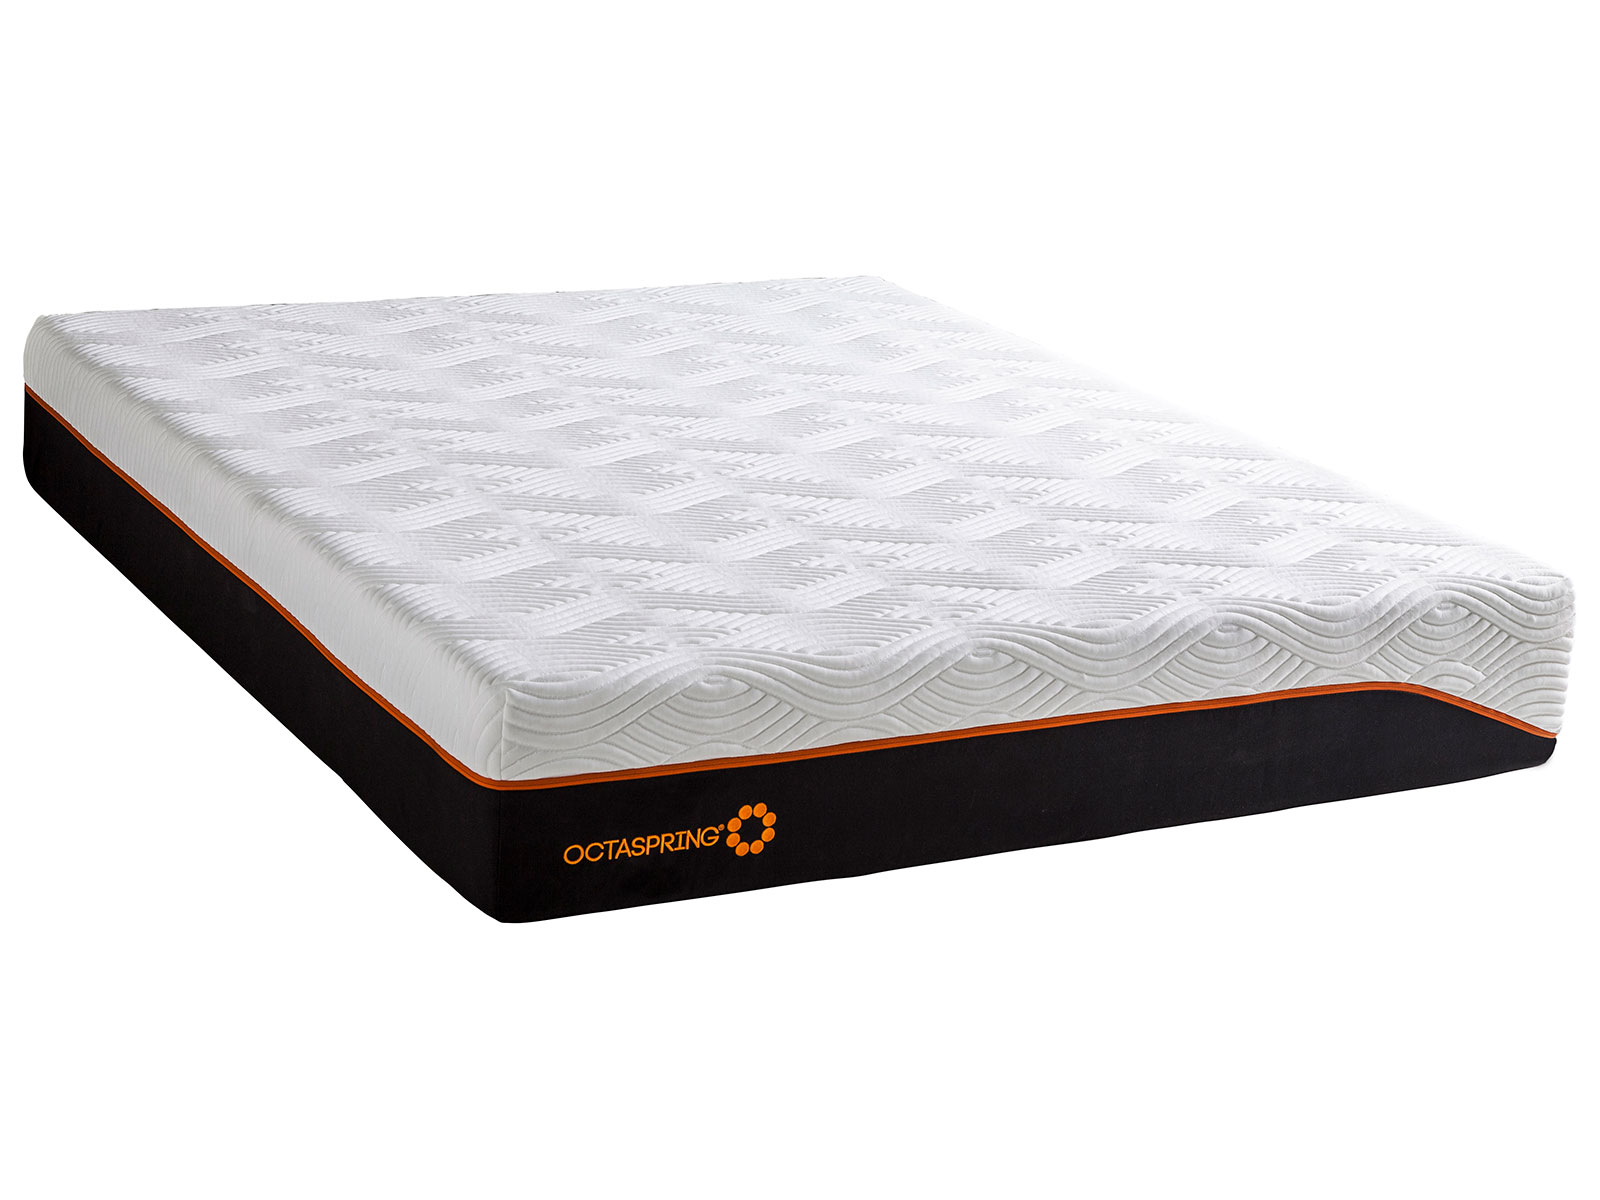 dormeo octaspring hybrid king size mattress